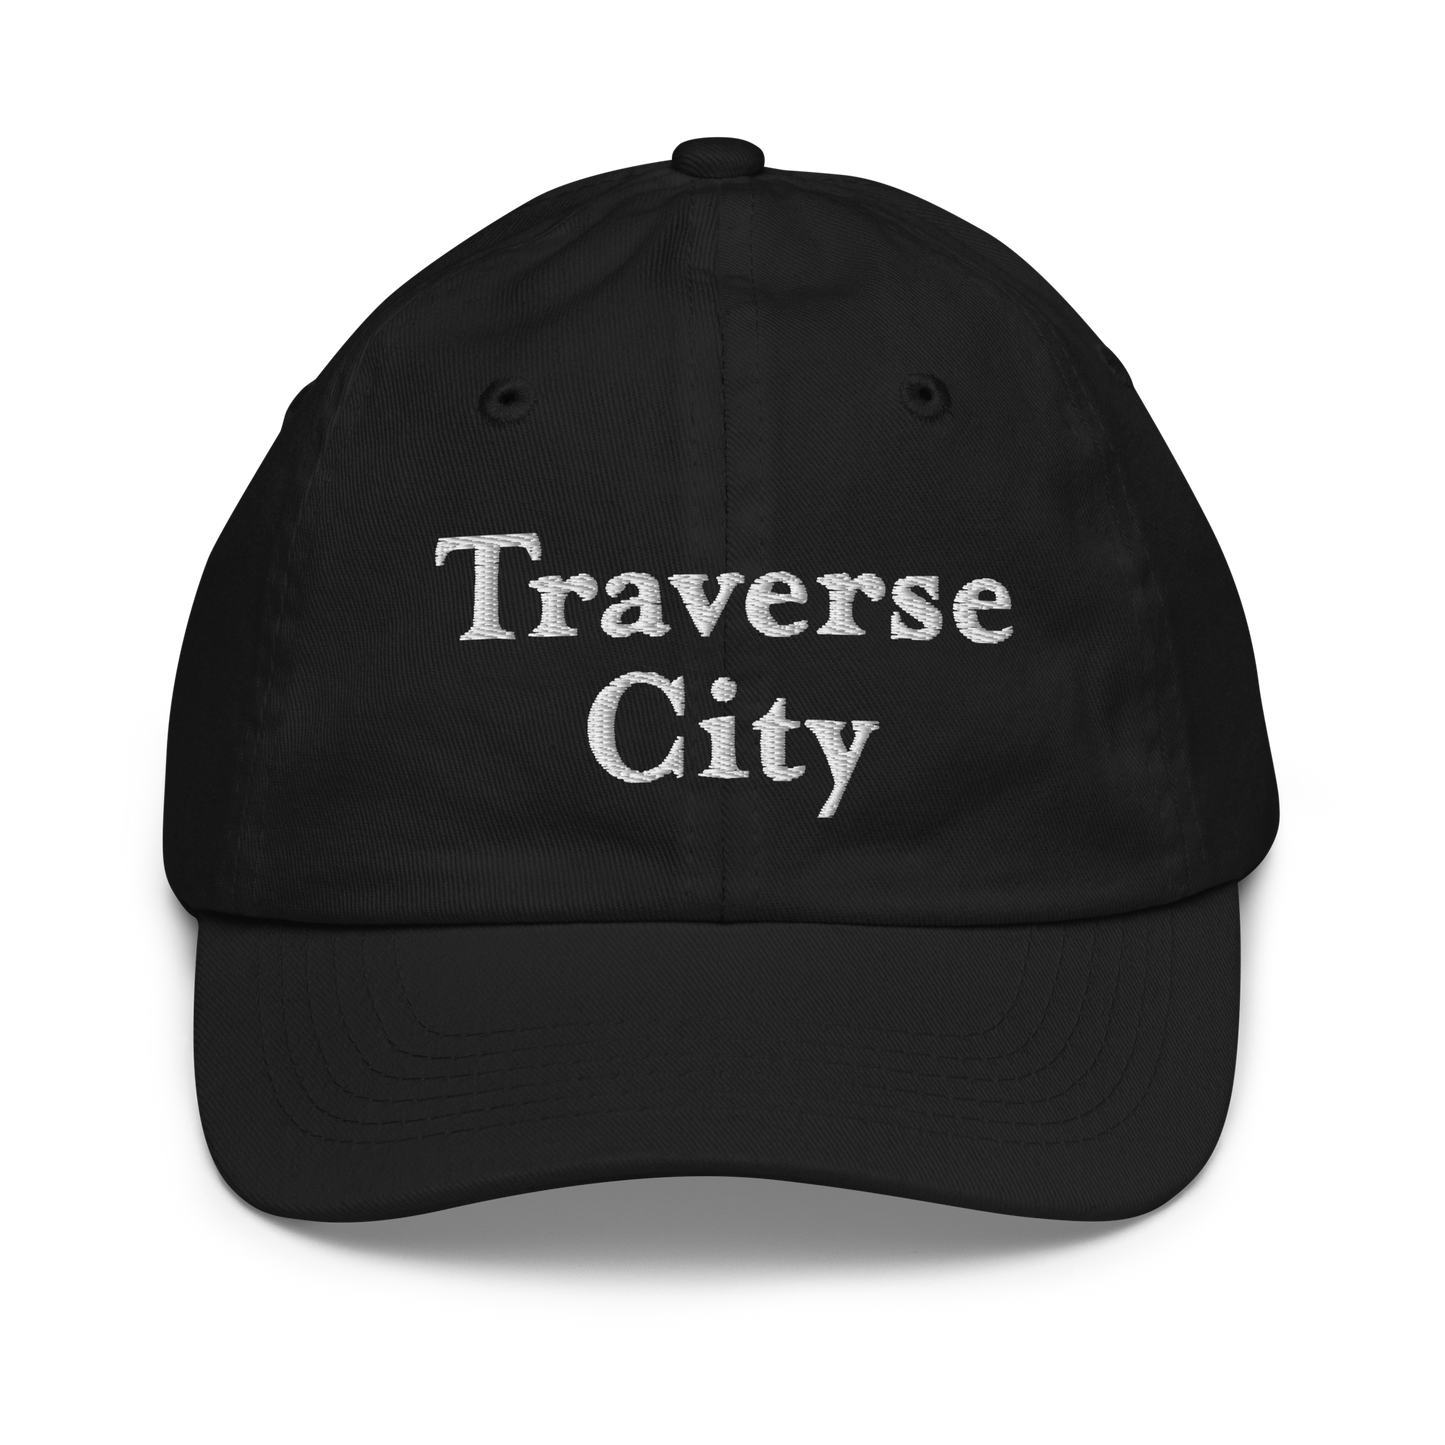 'Traverse City' Youth Baseball Cap | White/Navy Embroidery